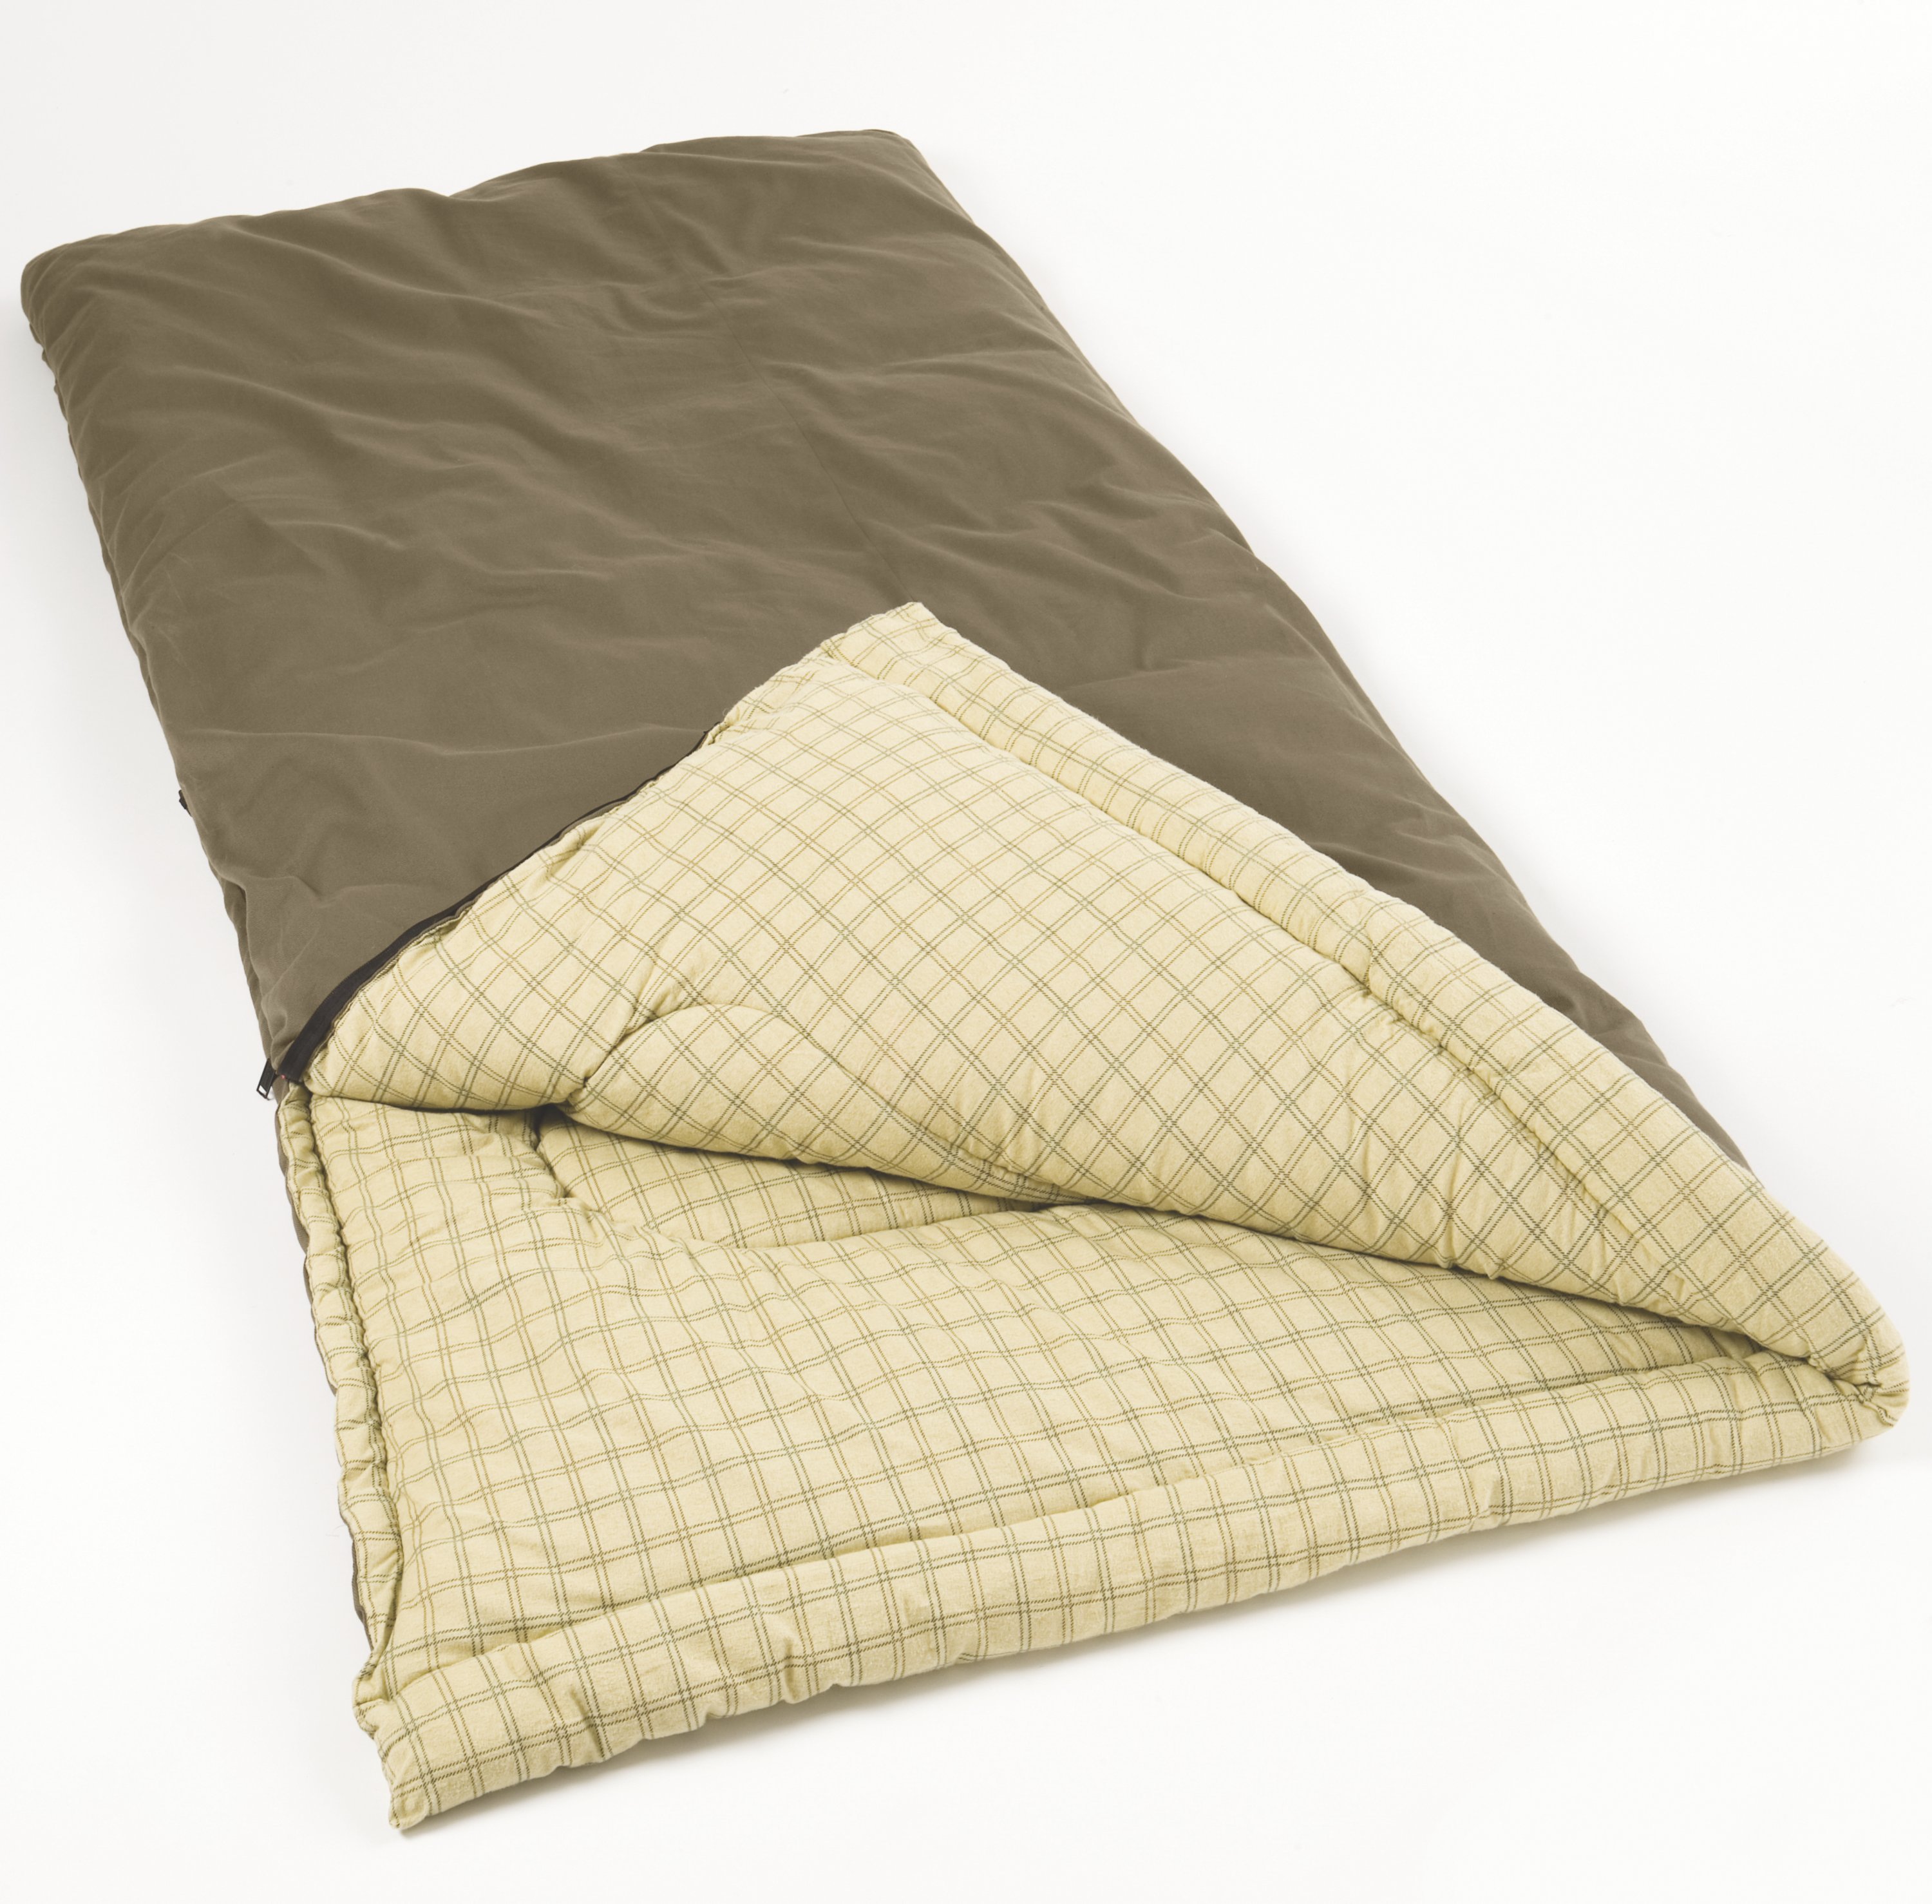 Sleeping Bag Bed Roll, Camping Sleeping Bag, Rolled Sleeping Bag